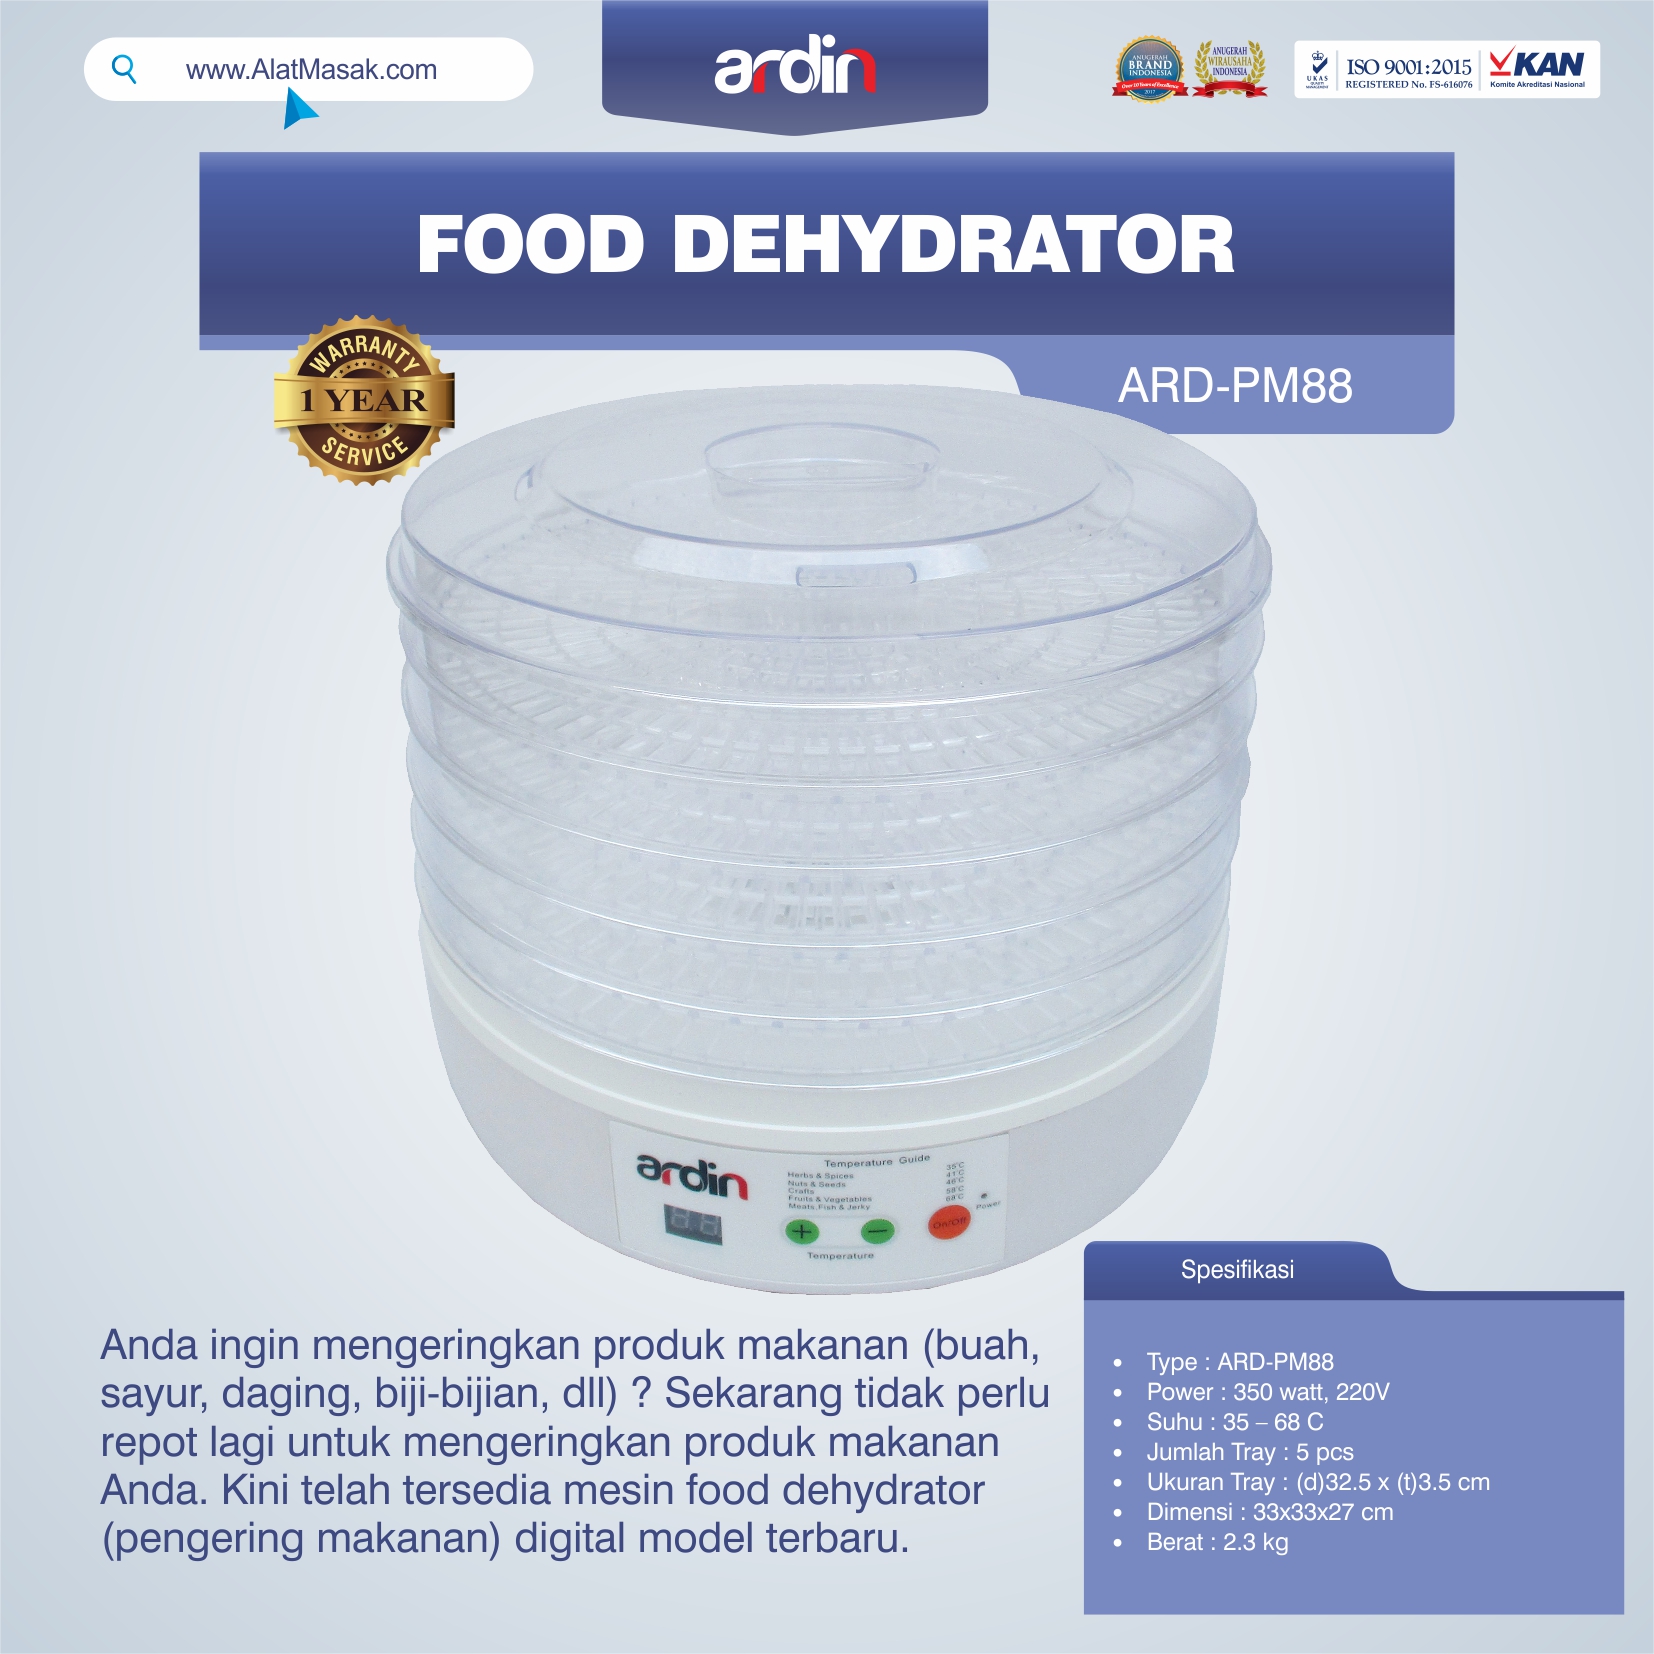 Jual Food Dehydrator ARD-PM88 di Malang